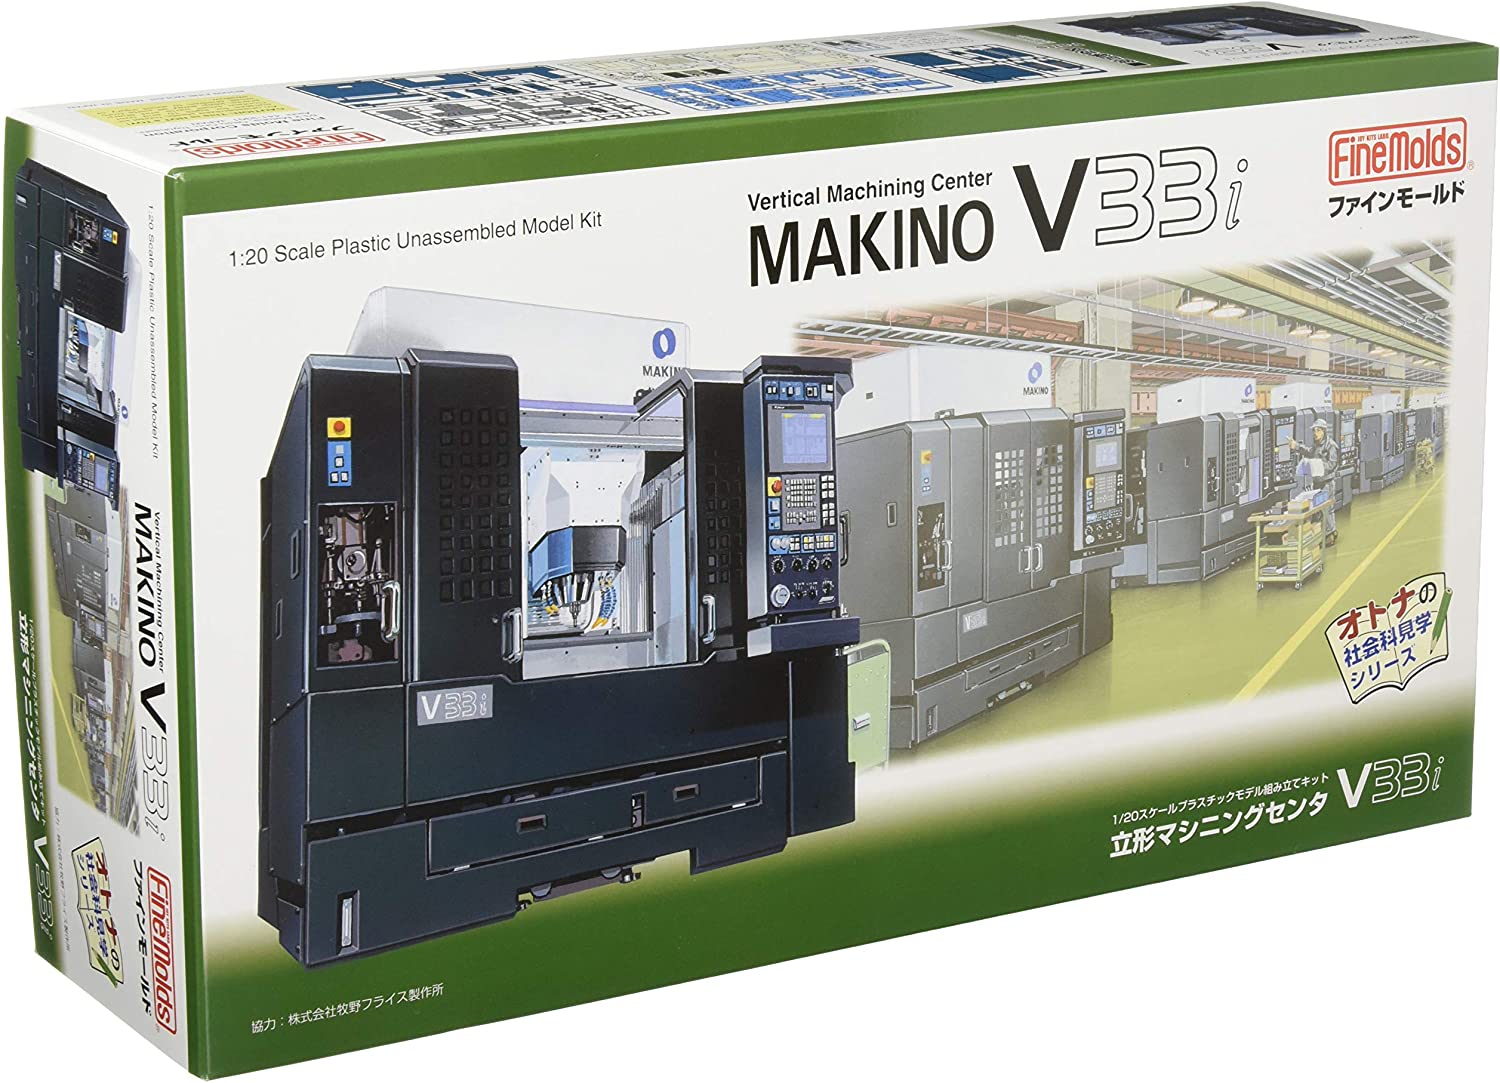 MKN101 Vertical Machining Centers Makino V33i